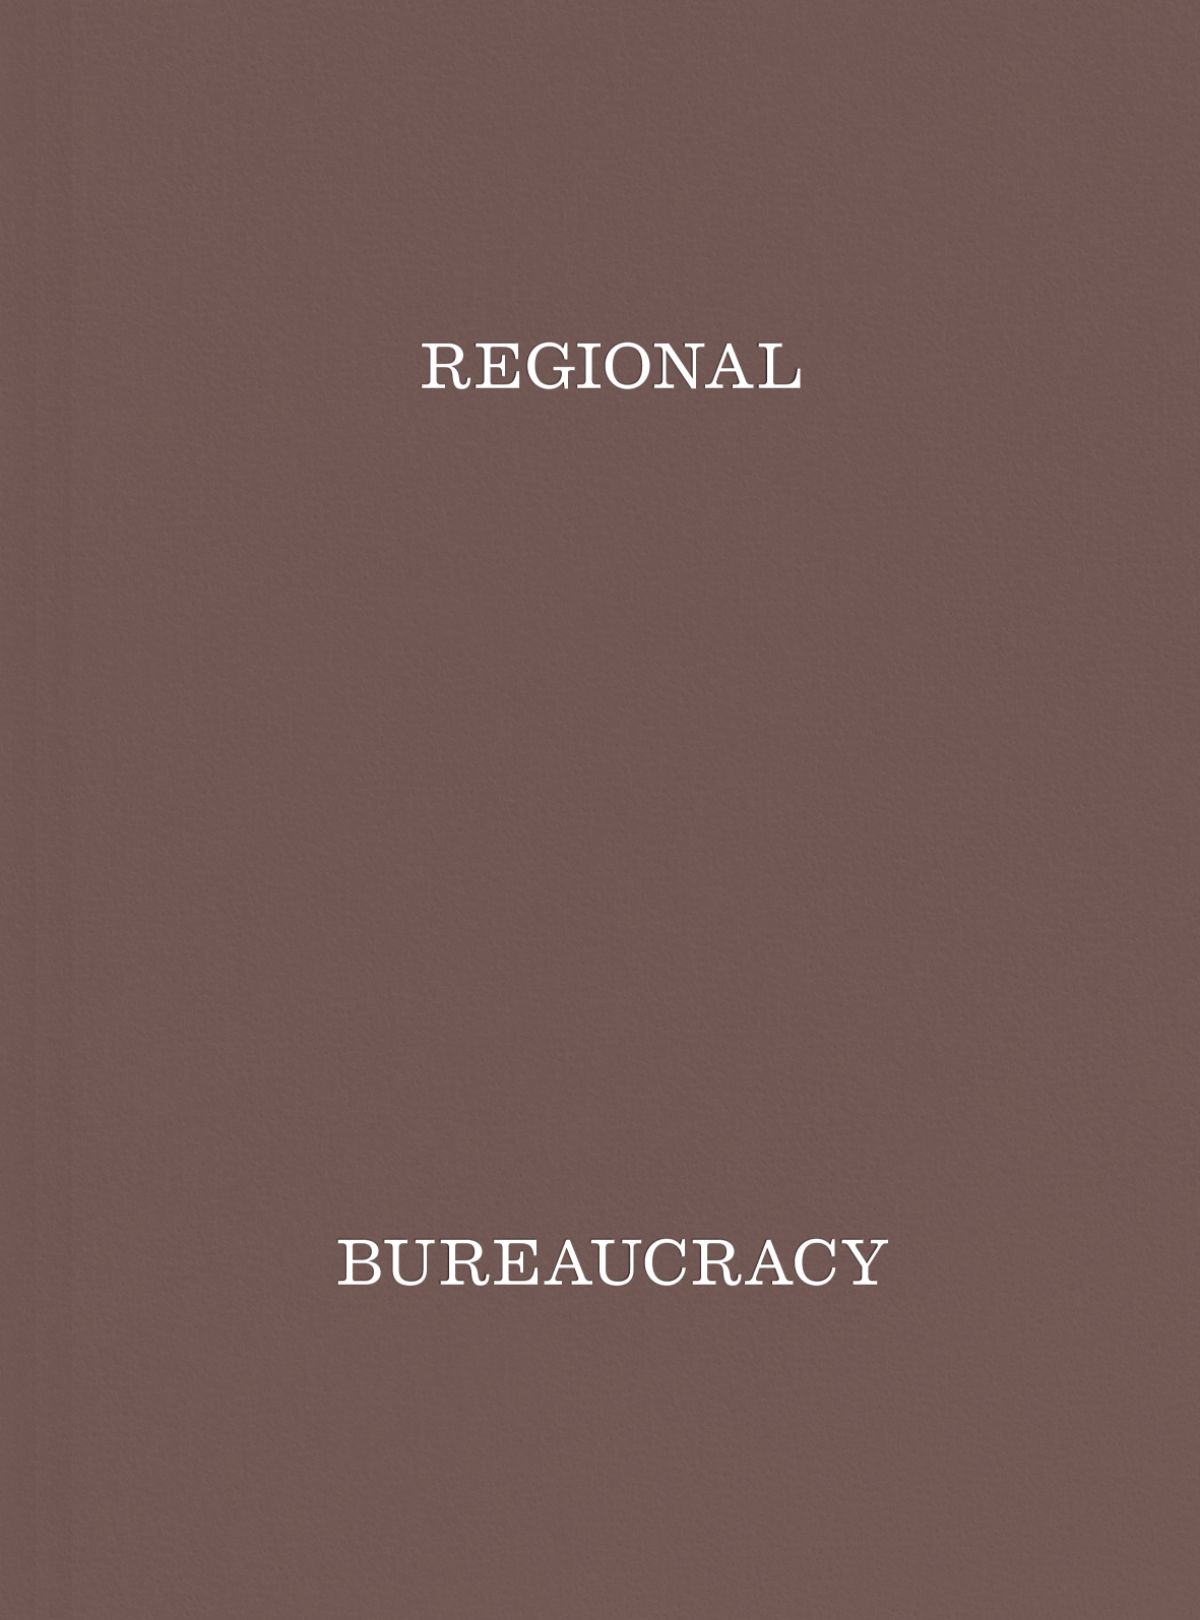 Regional Bureaucracy Guillermo Fernández-Abascal and Hamish McIntosh